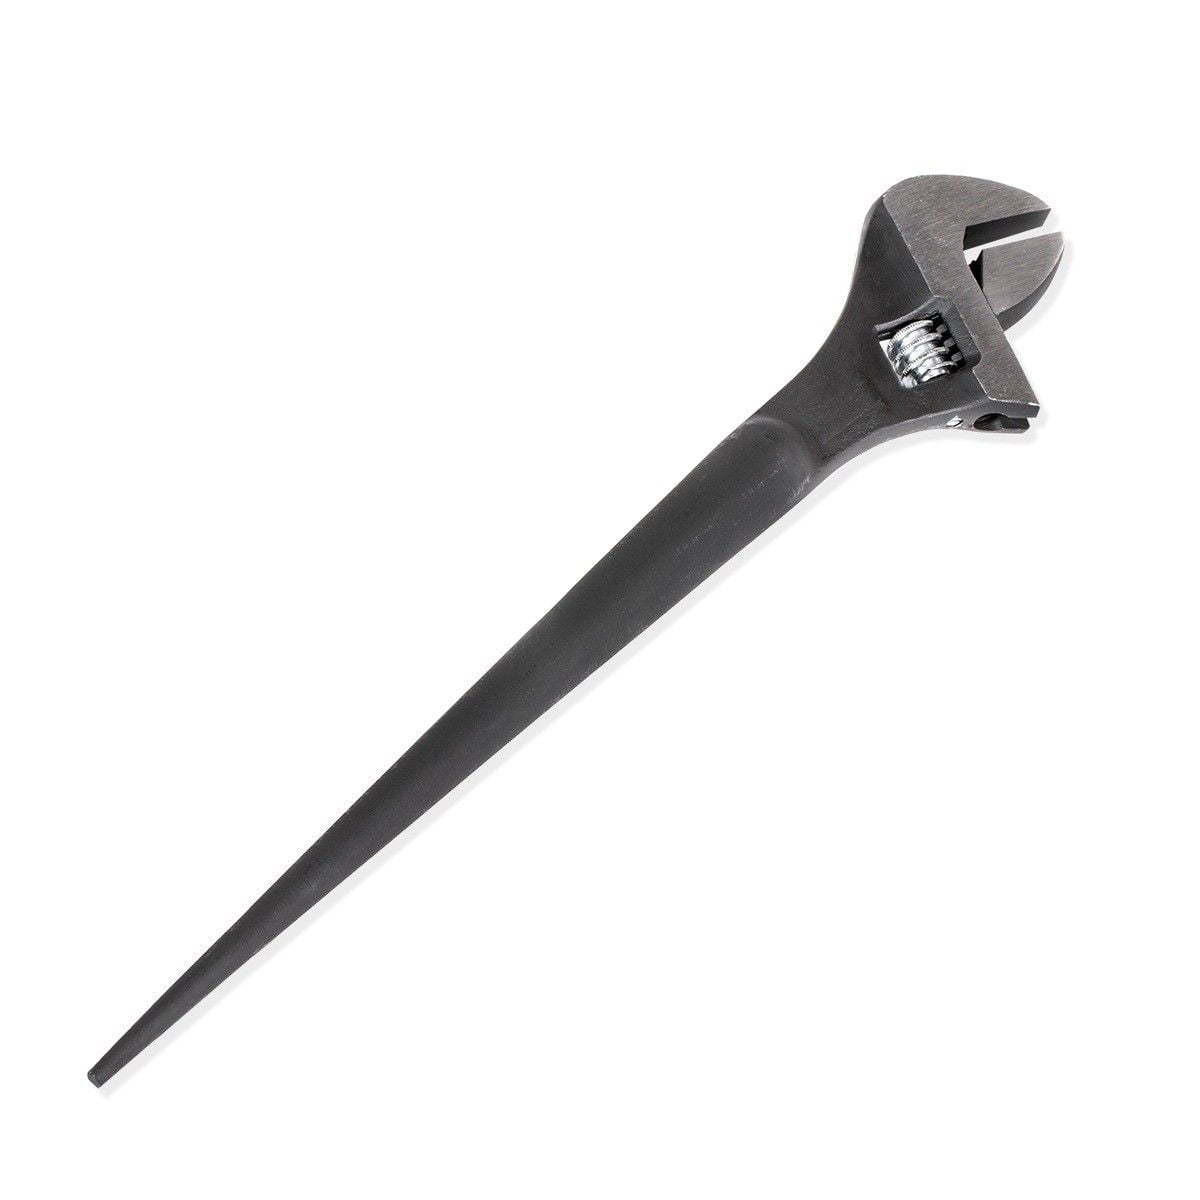 Titan 223 3piece Adjustable Construction Spud Wrench Set for sale online 